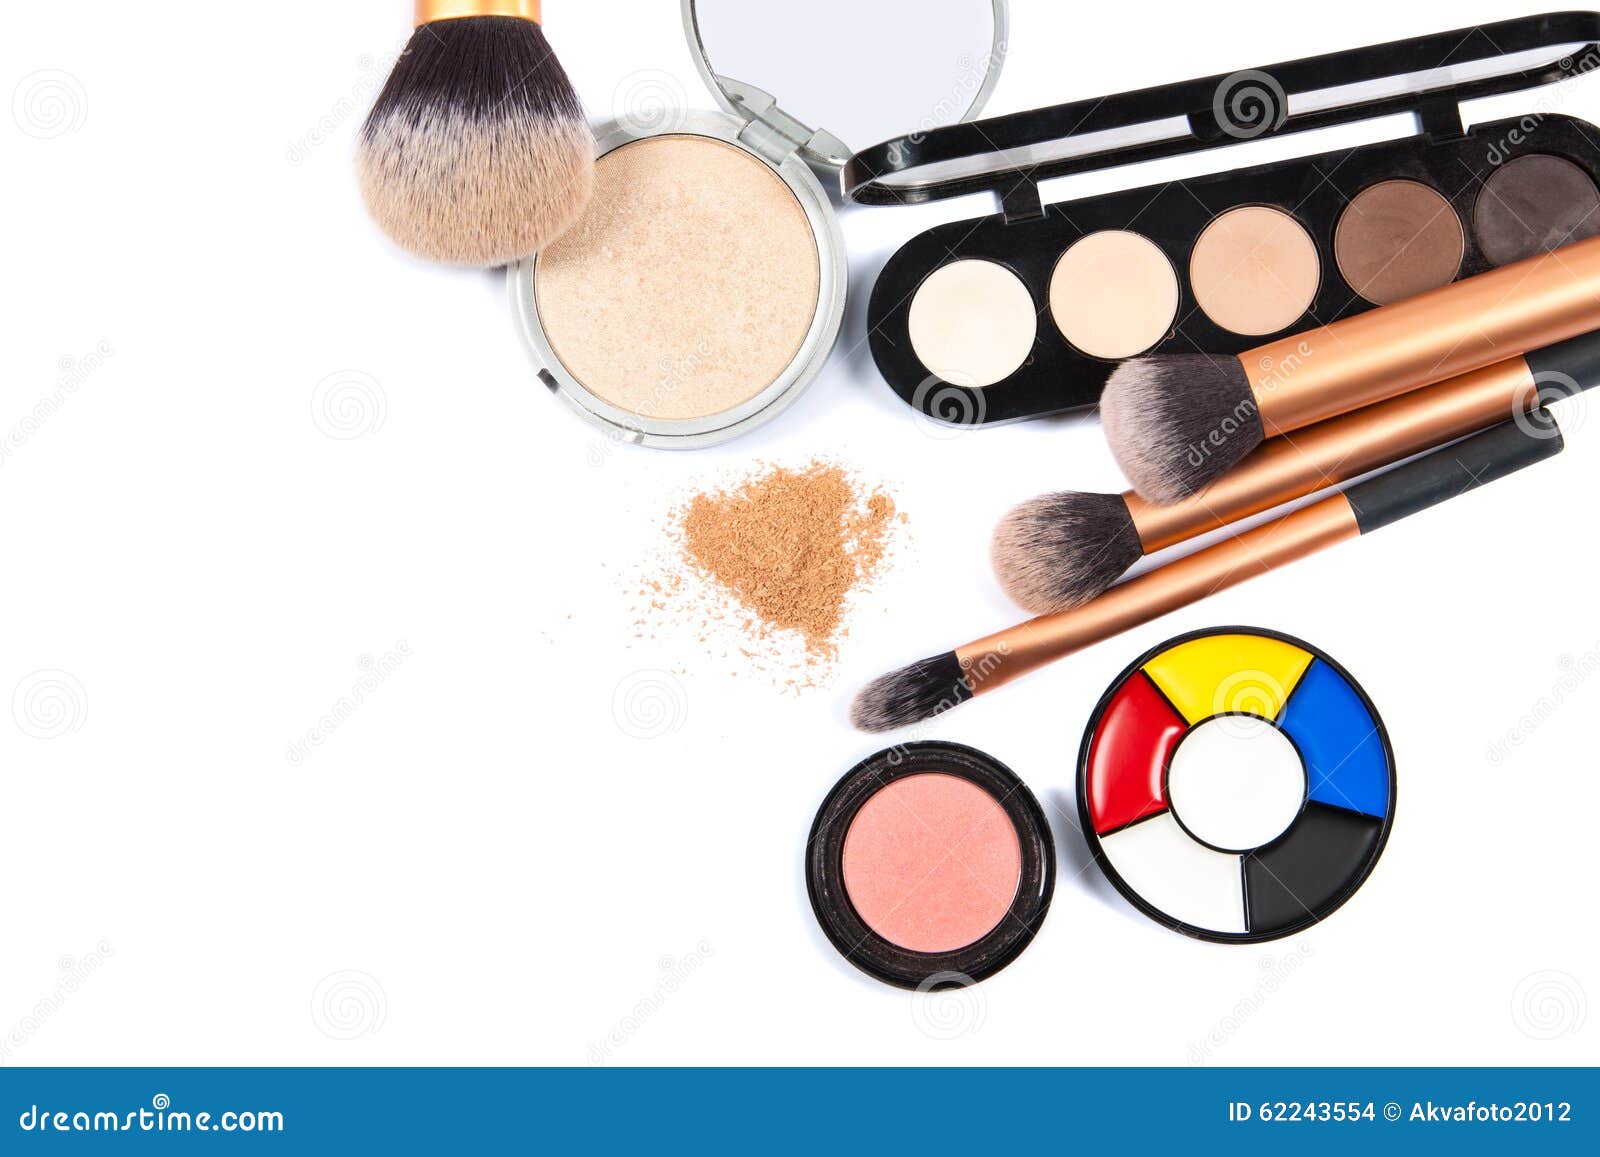 Cosmetics And Makeup Tools For Professional Makeup Top View Stock